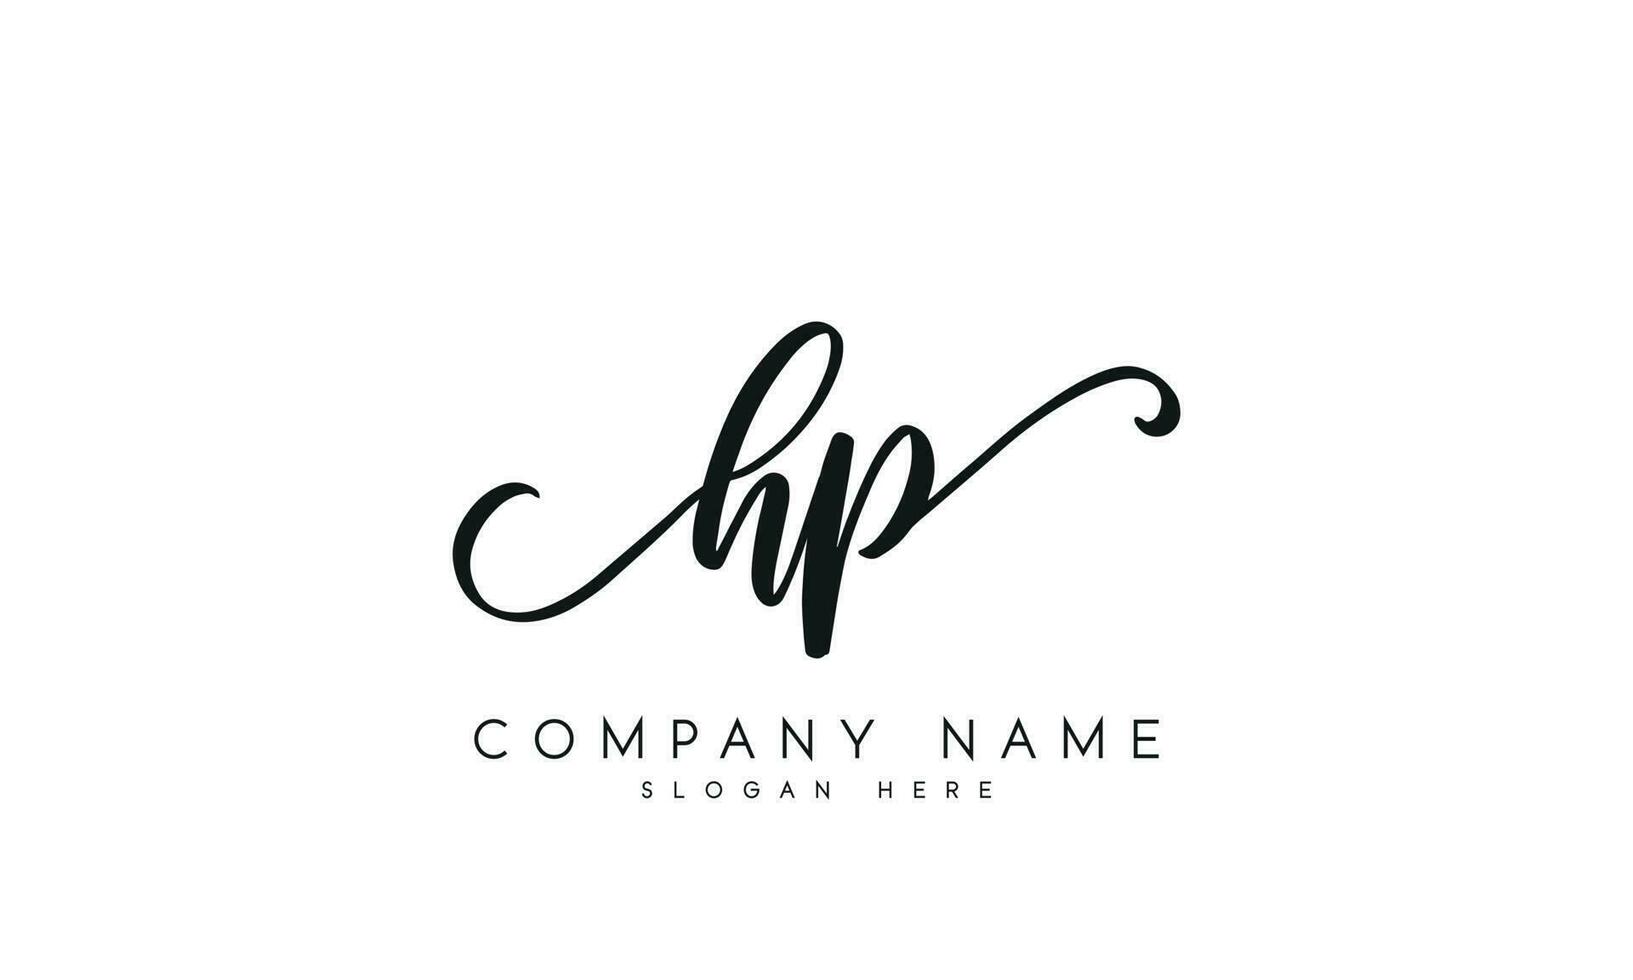 Handwriting HP logo design. HP logo design vector illustration on white background. free vector